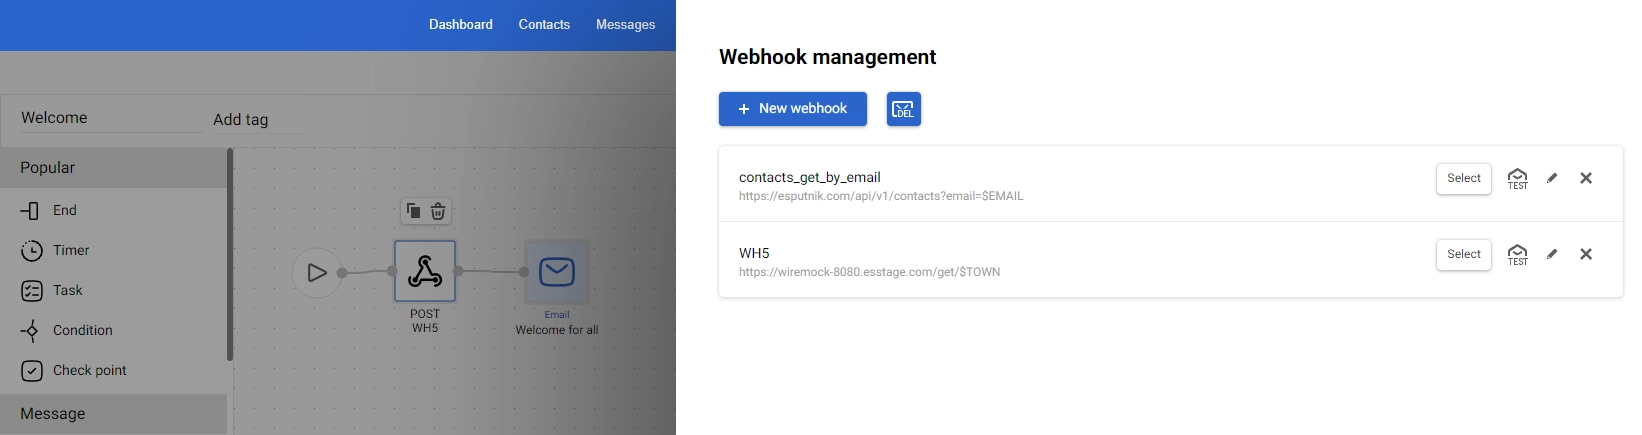 Webhook management